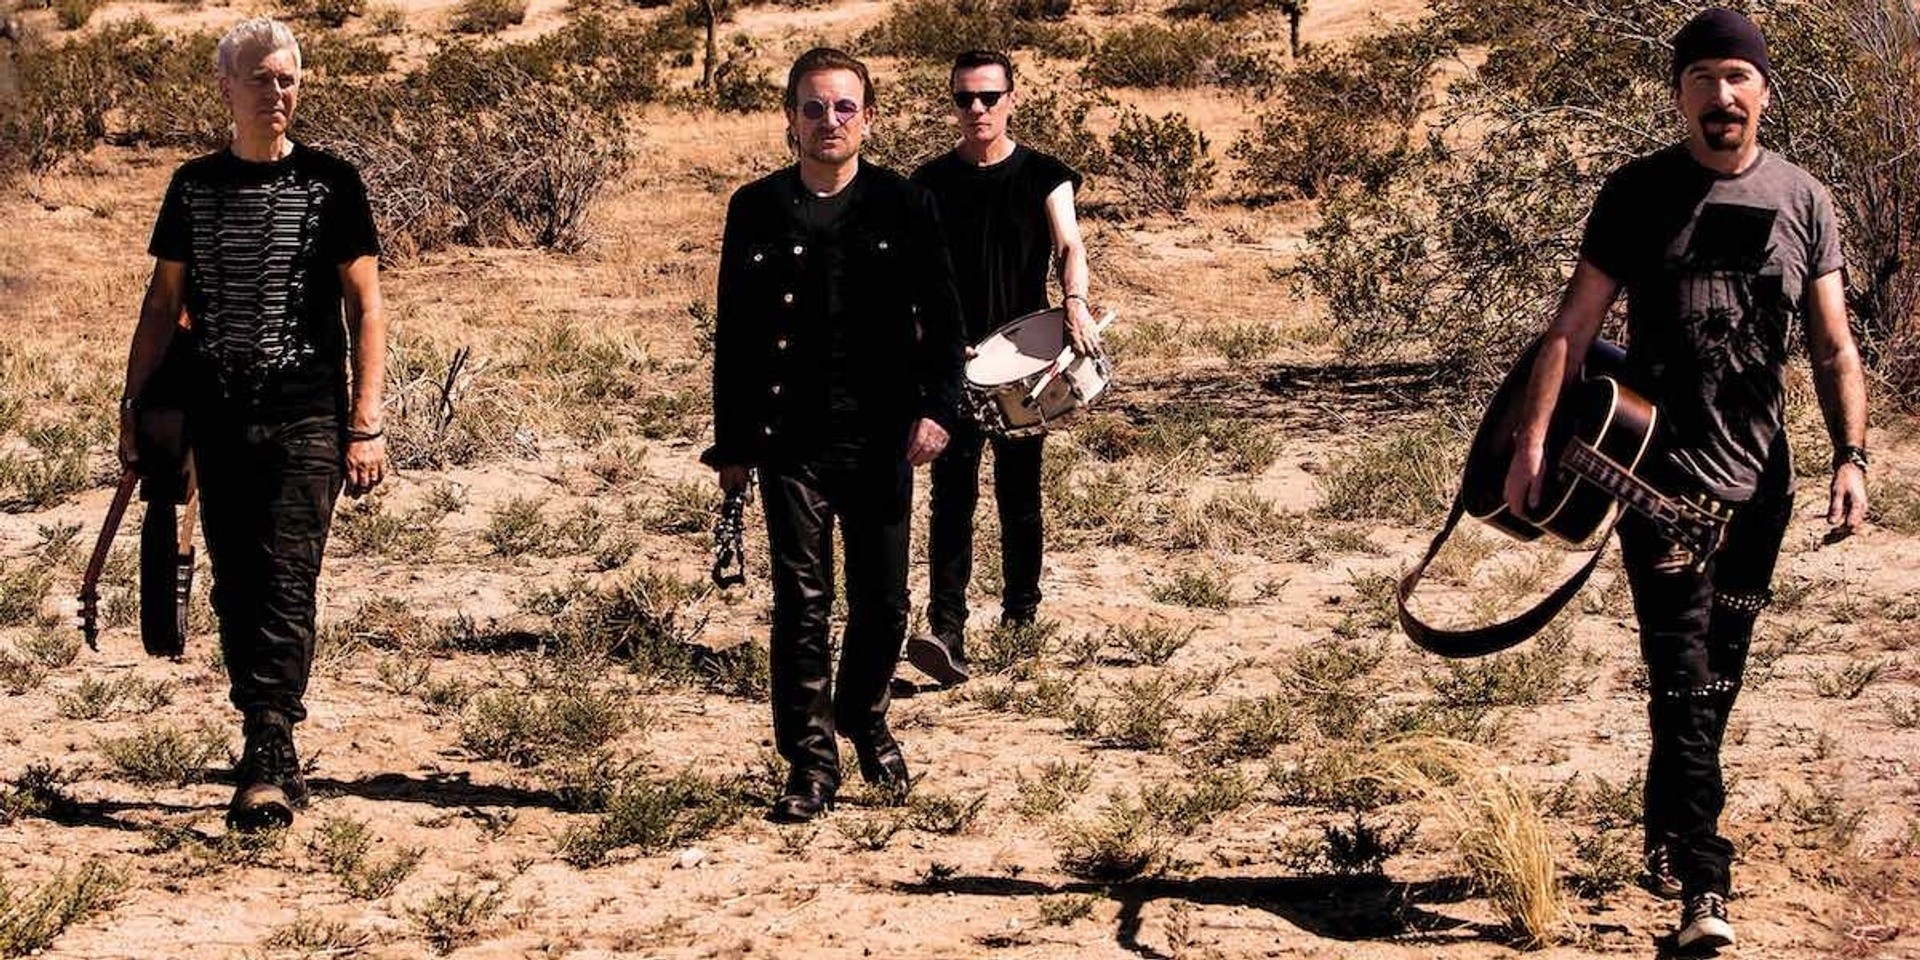 Details surrounding U2's Singapore concert have been announced